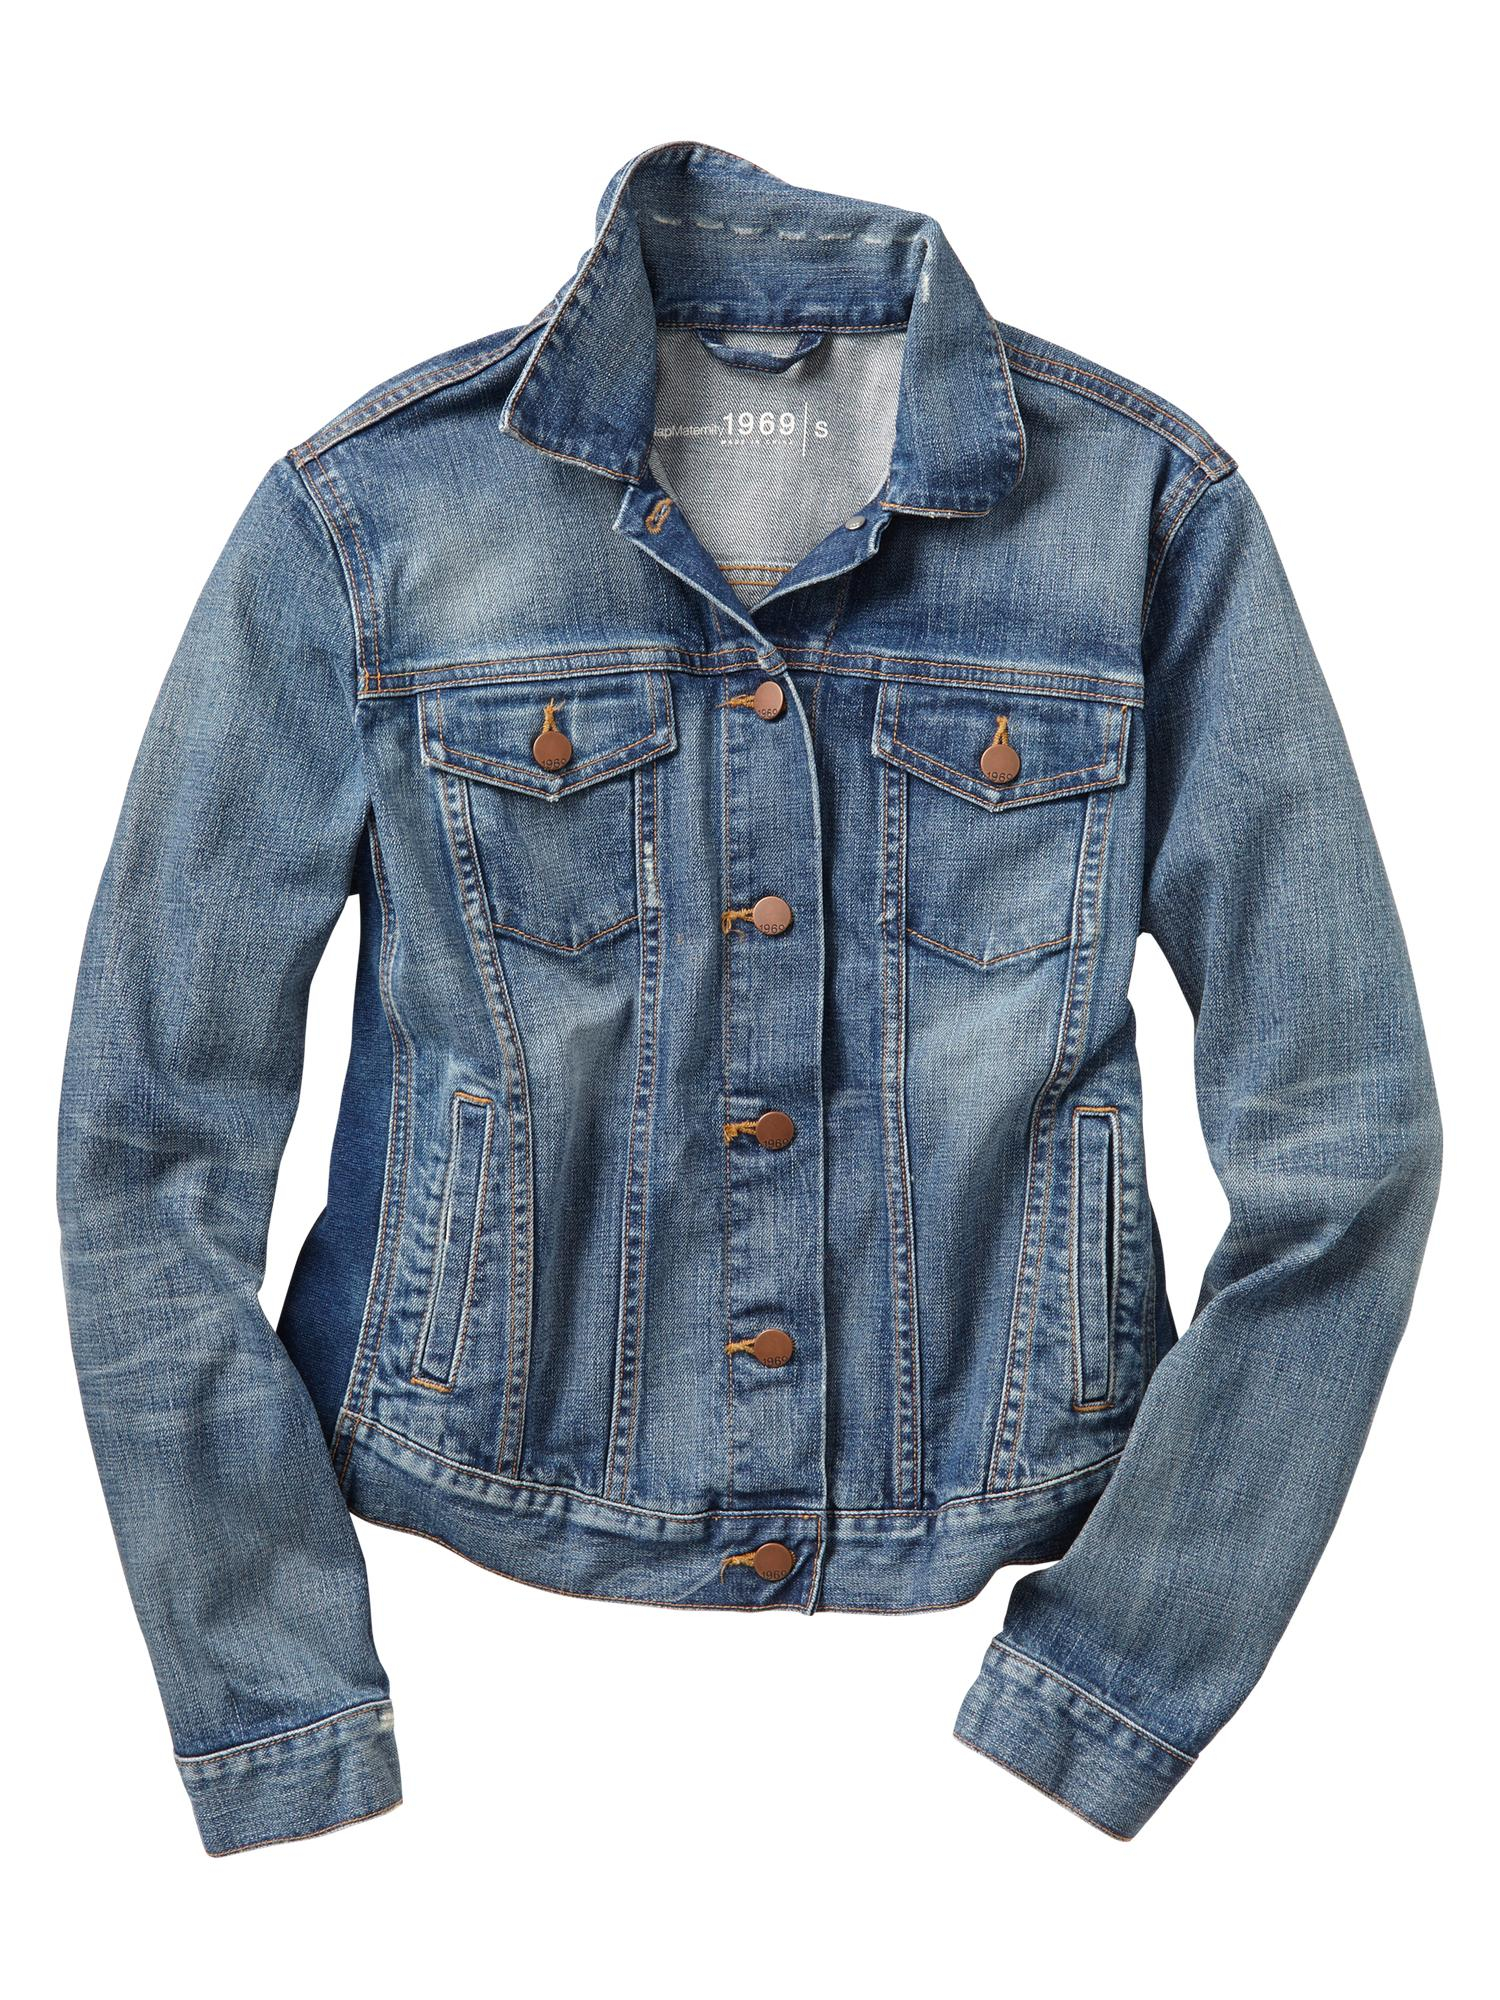 Gap 1969 Heritage Denim Jacket in Blue (JERICHO WASH) - Save 29% | Lyst